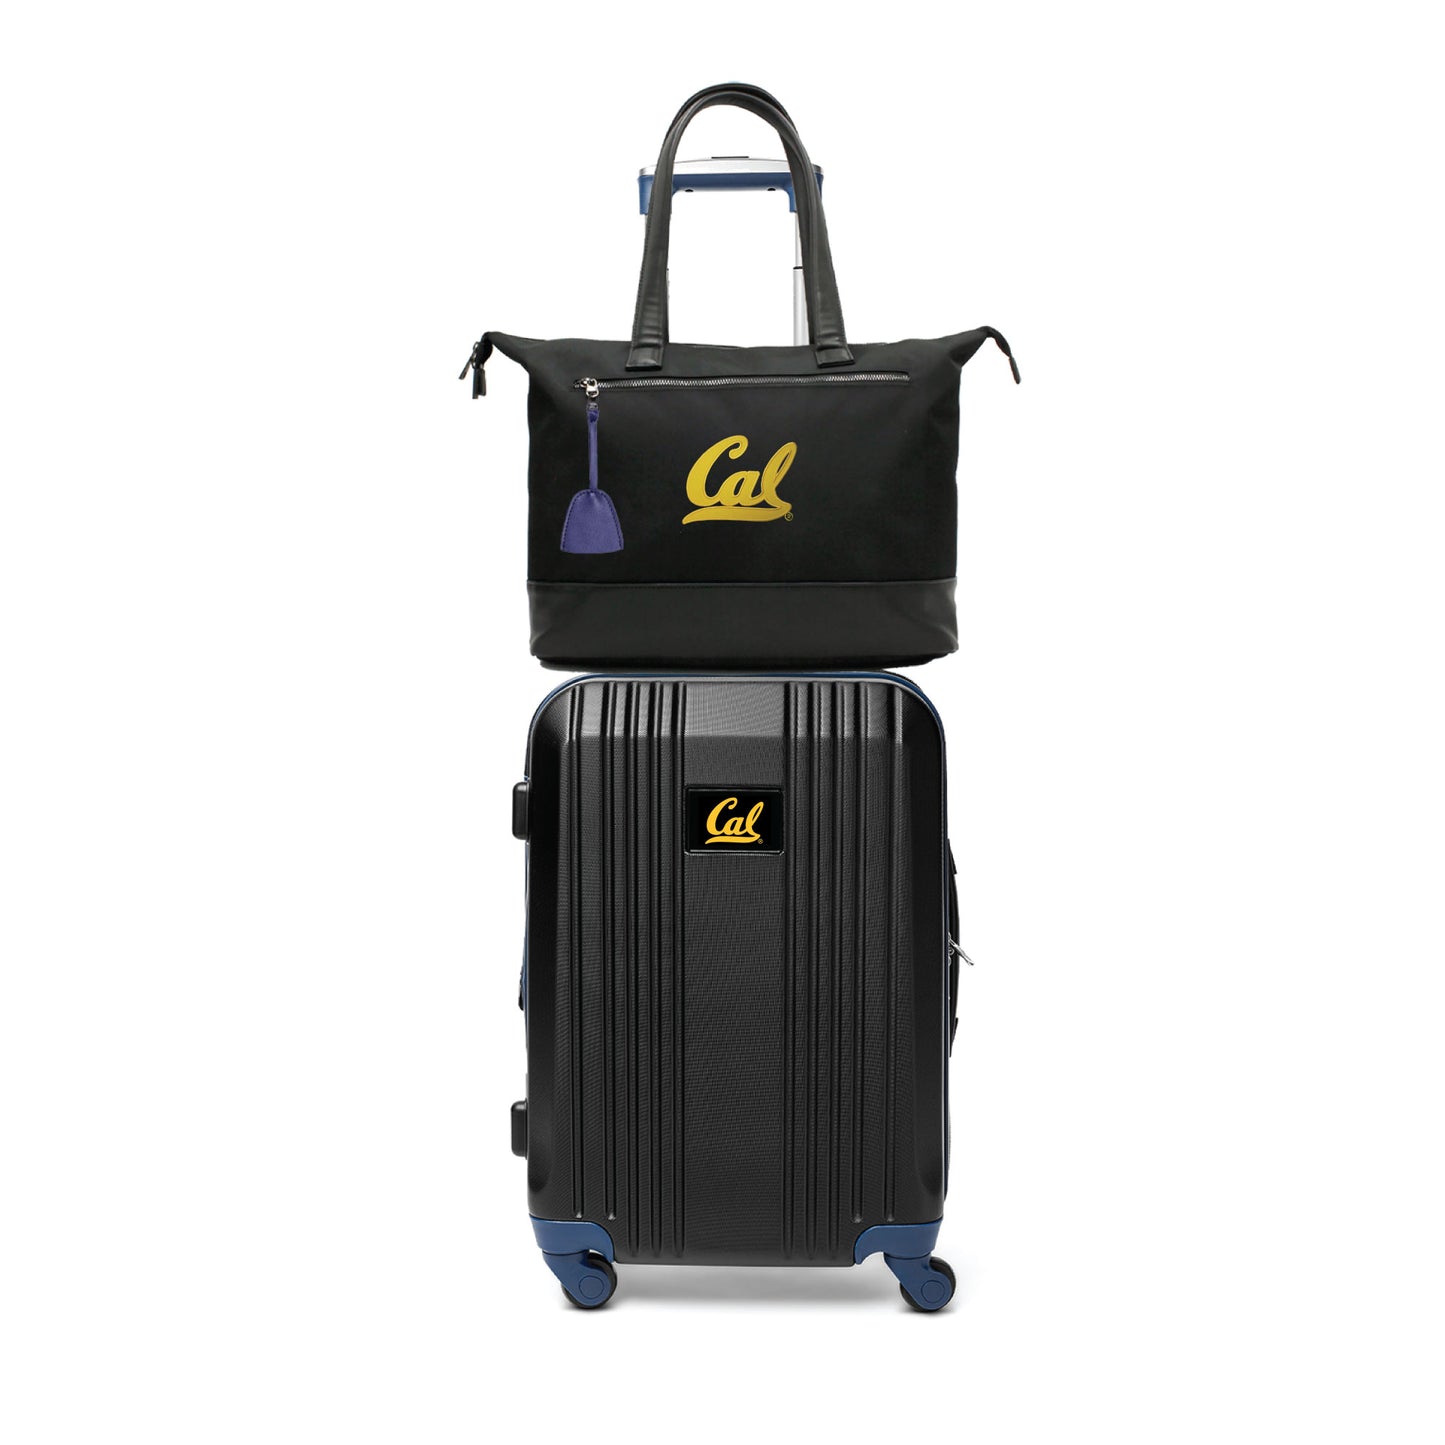 California Bears Premium Laptop Tote Bag and Luggage Set